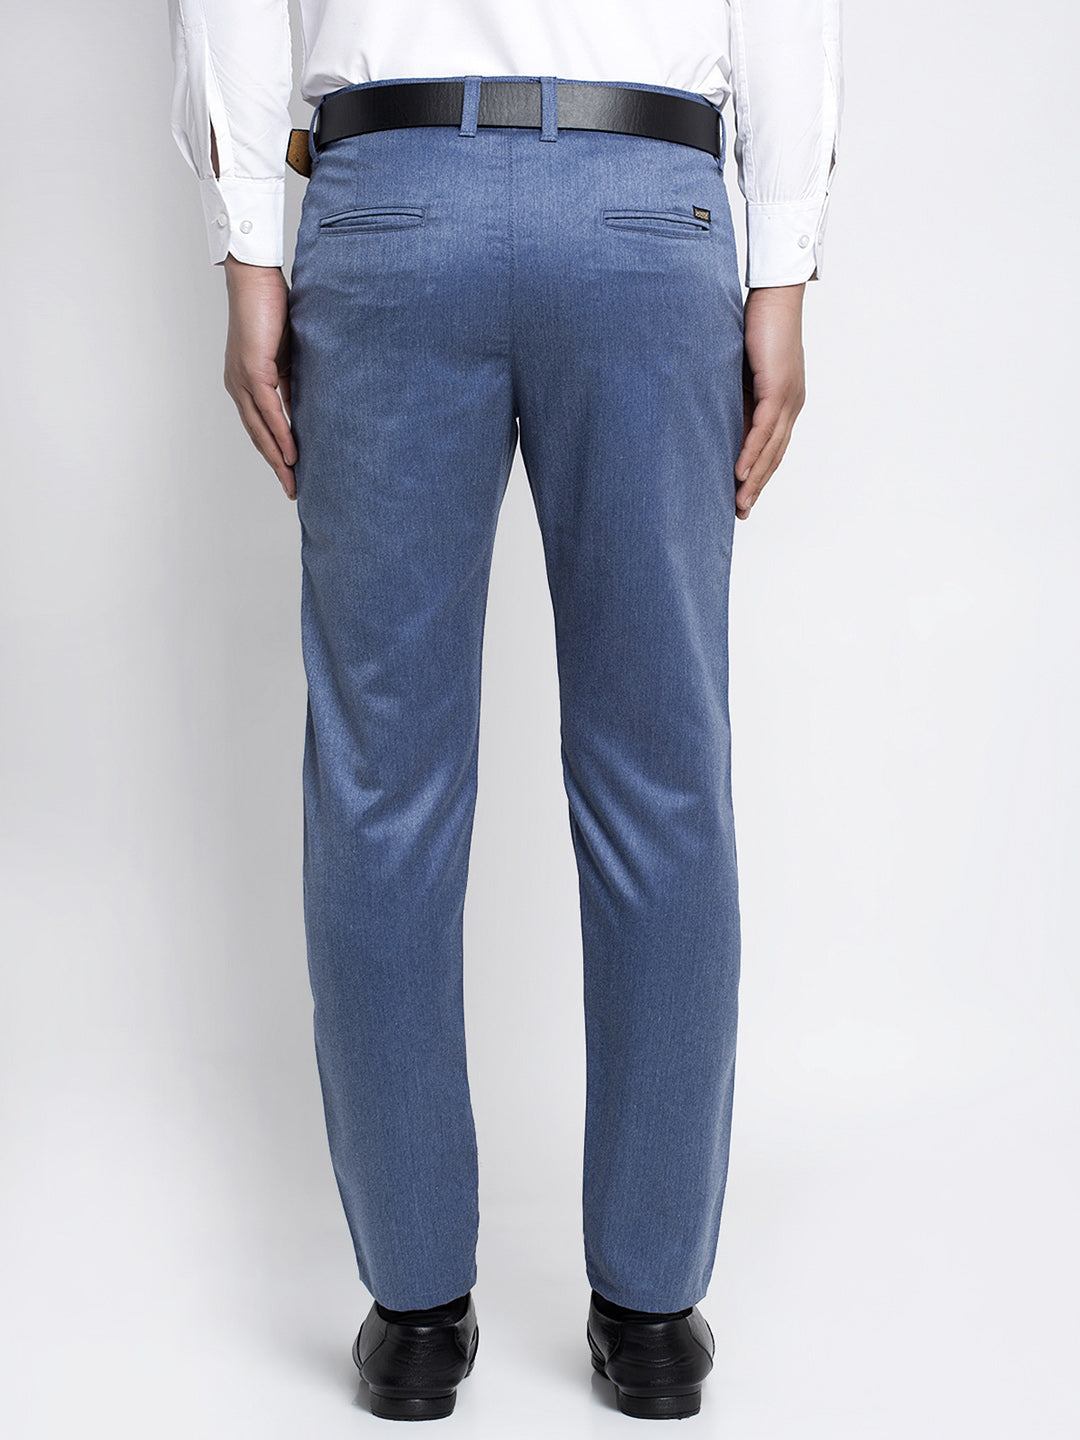 Men's Blue Cotton Solid Formal Trousers ( FGP 265Indigo ) - Jainish